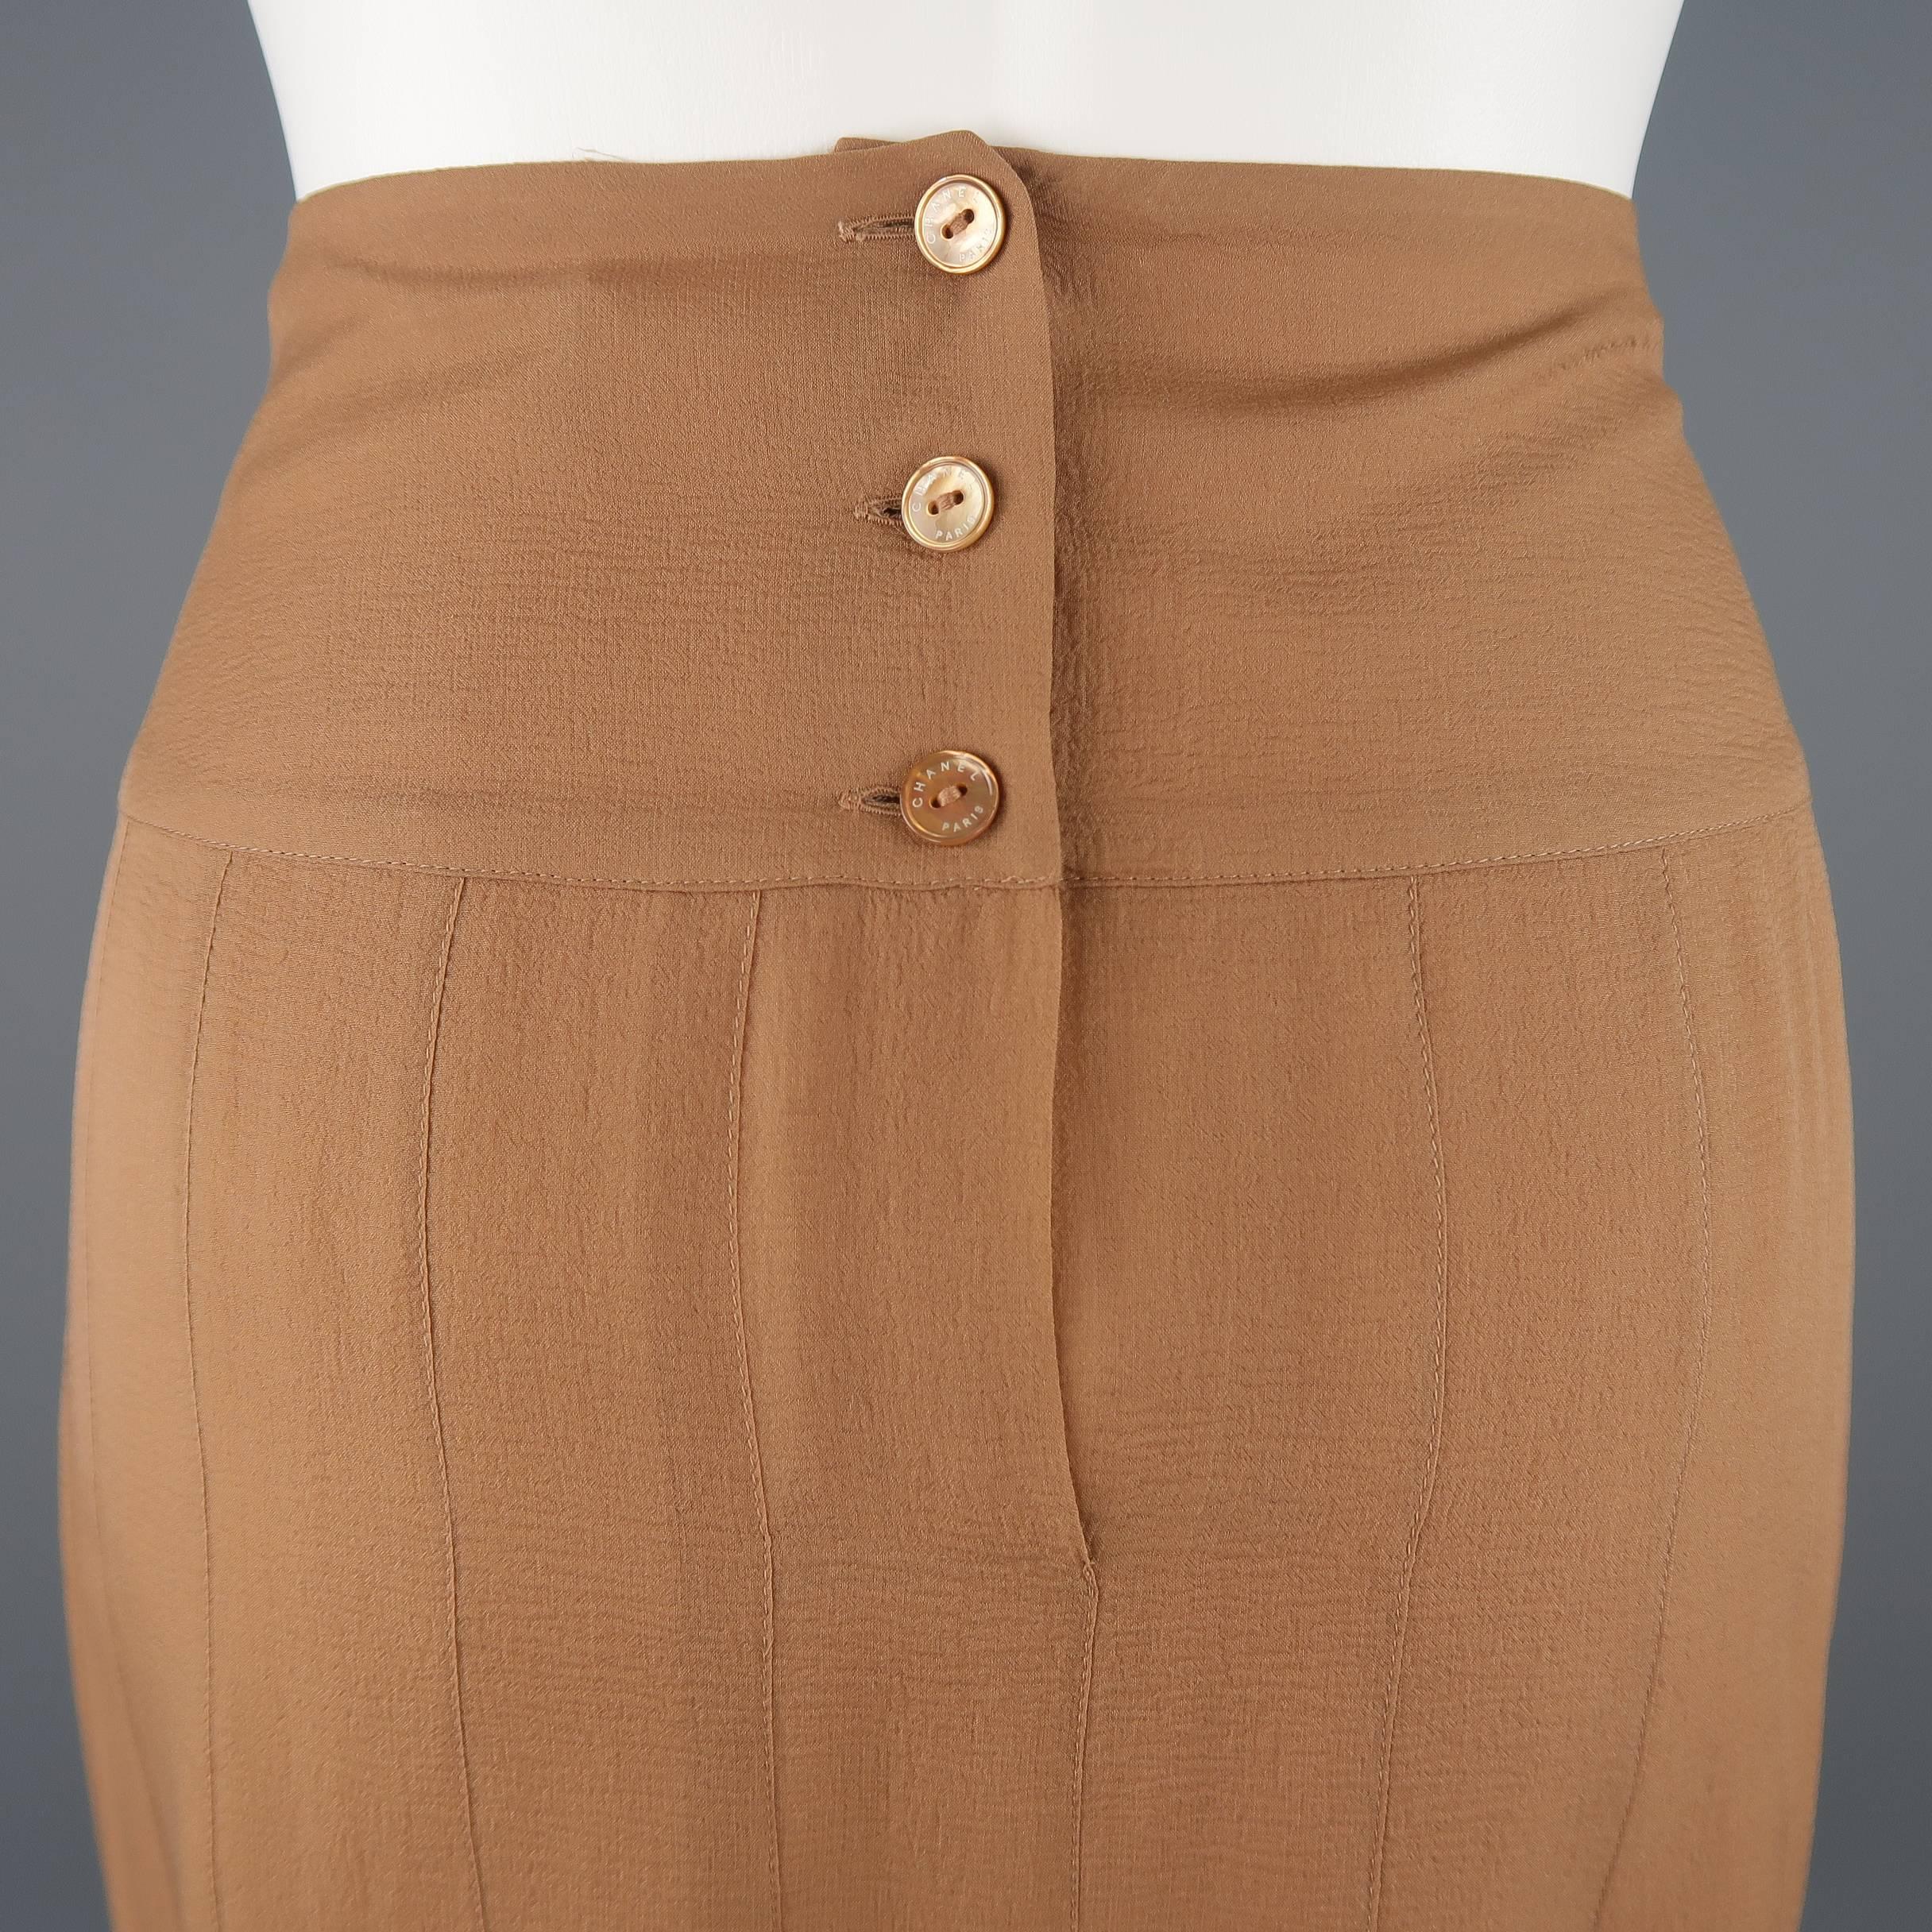 tan pencil skirt